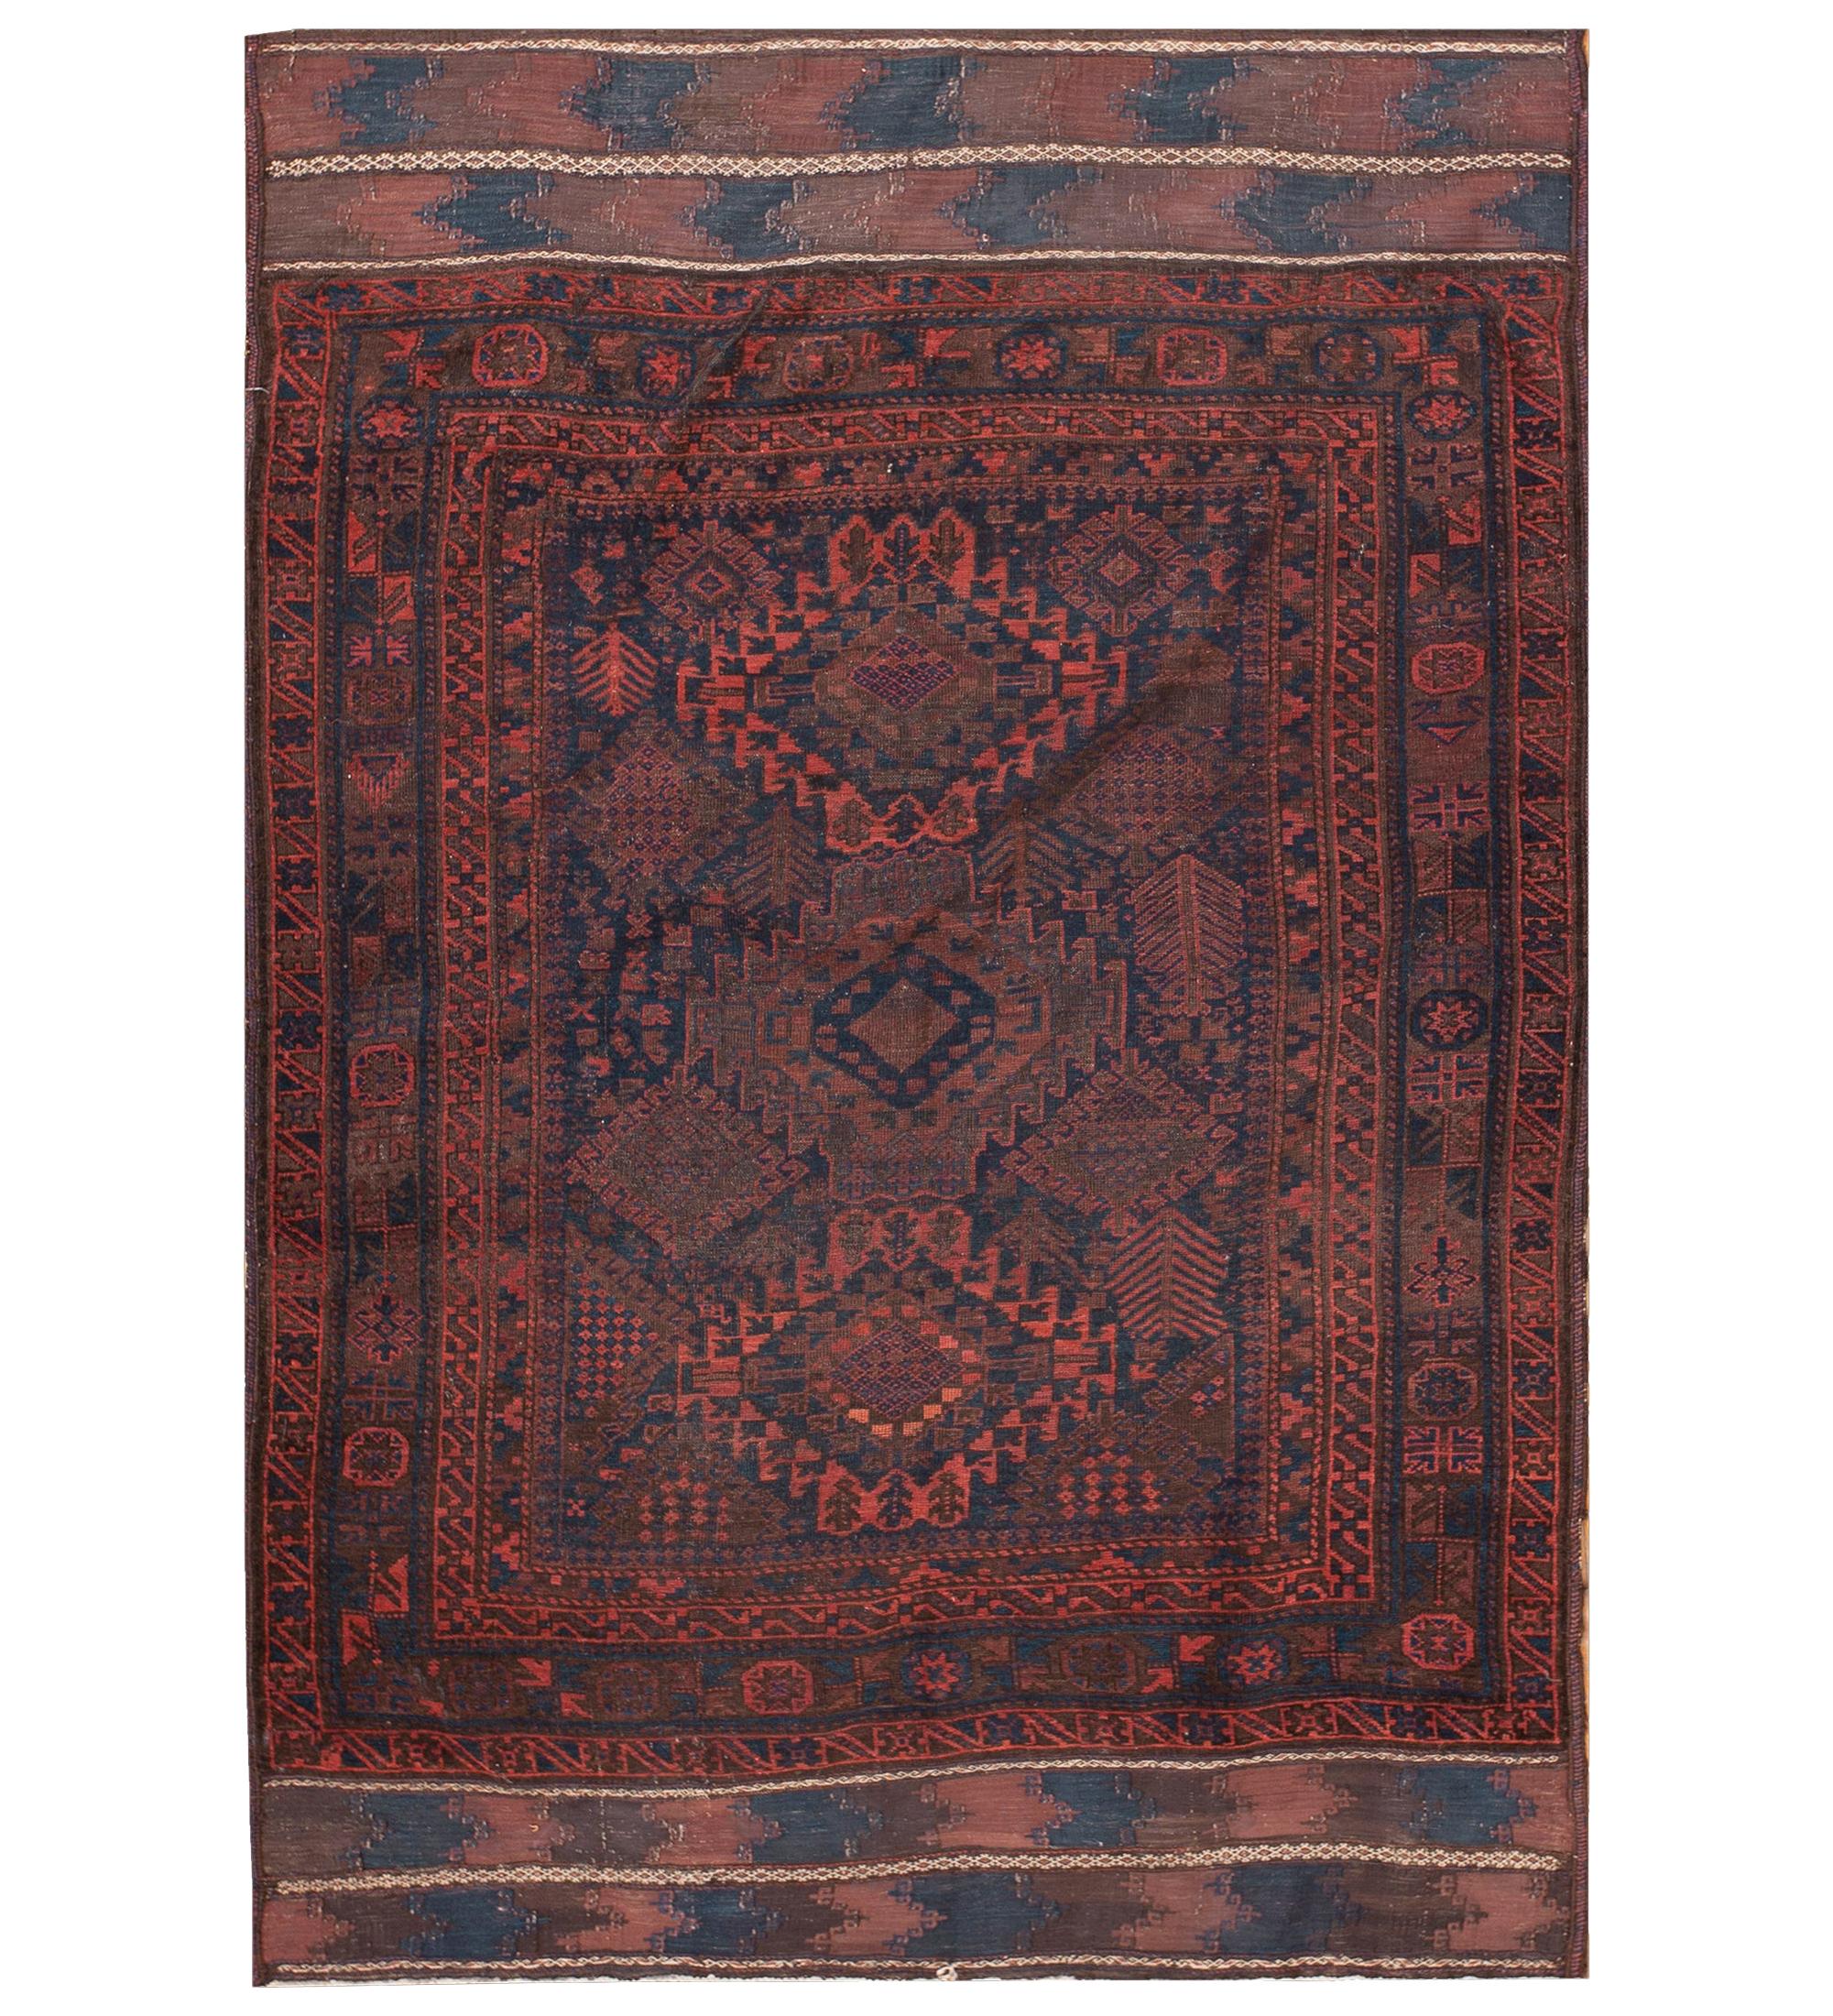 Late 19th Century Baluch Carpet ( 4'6" x '6'9" - 137 x 206 )